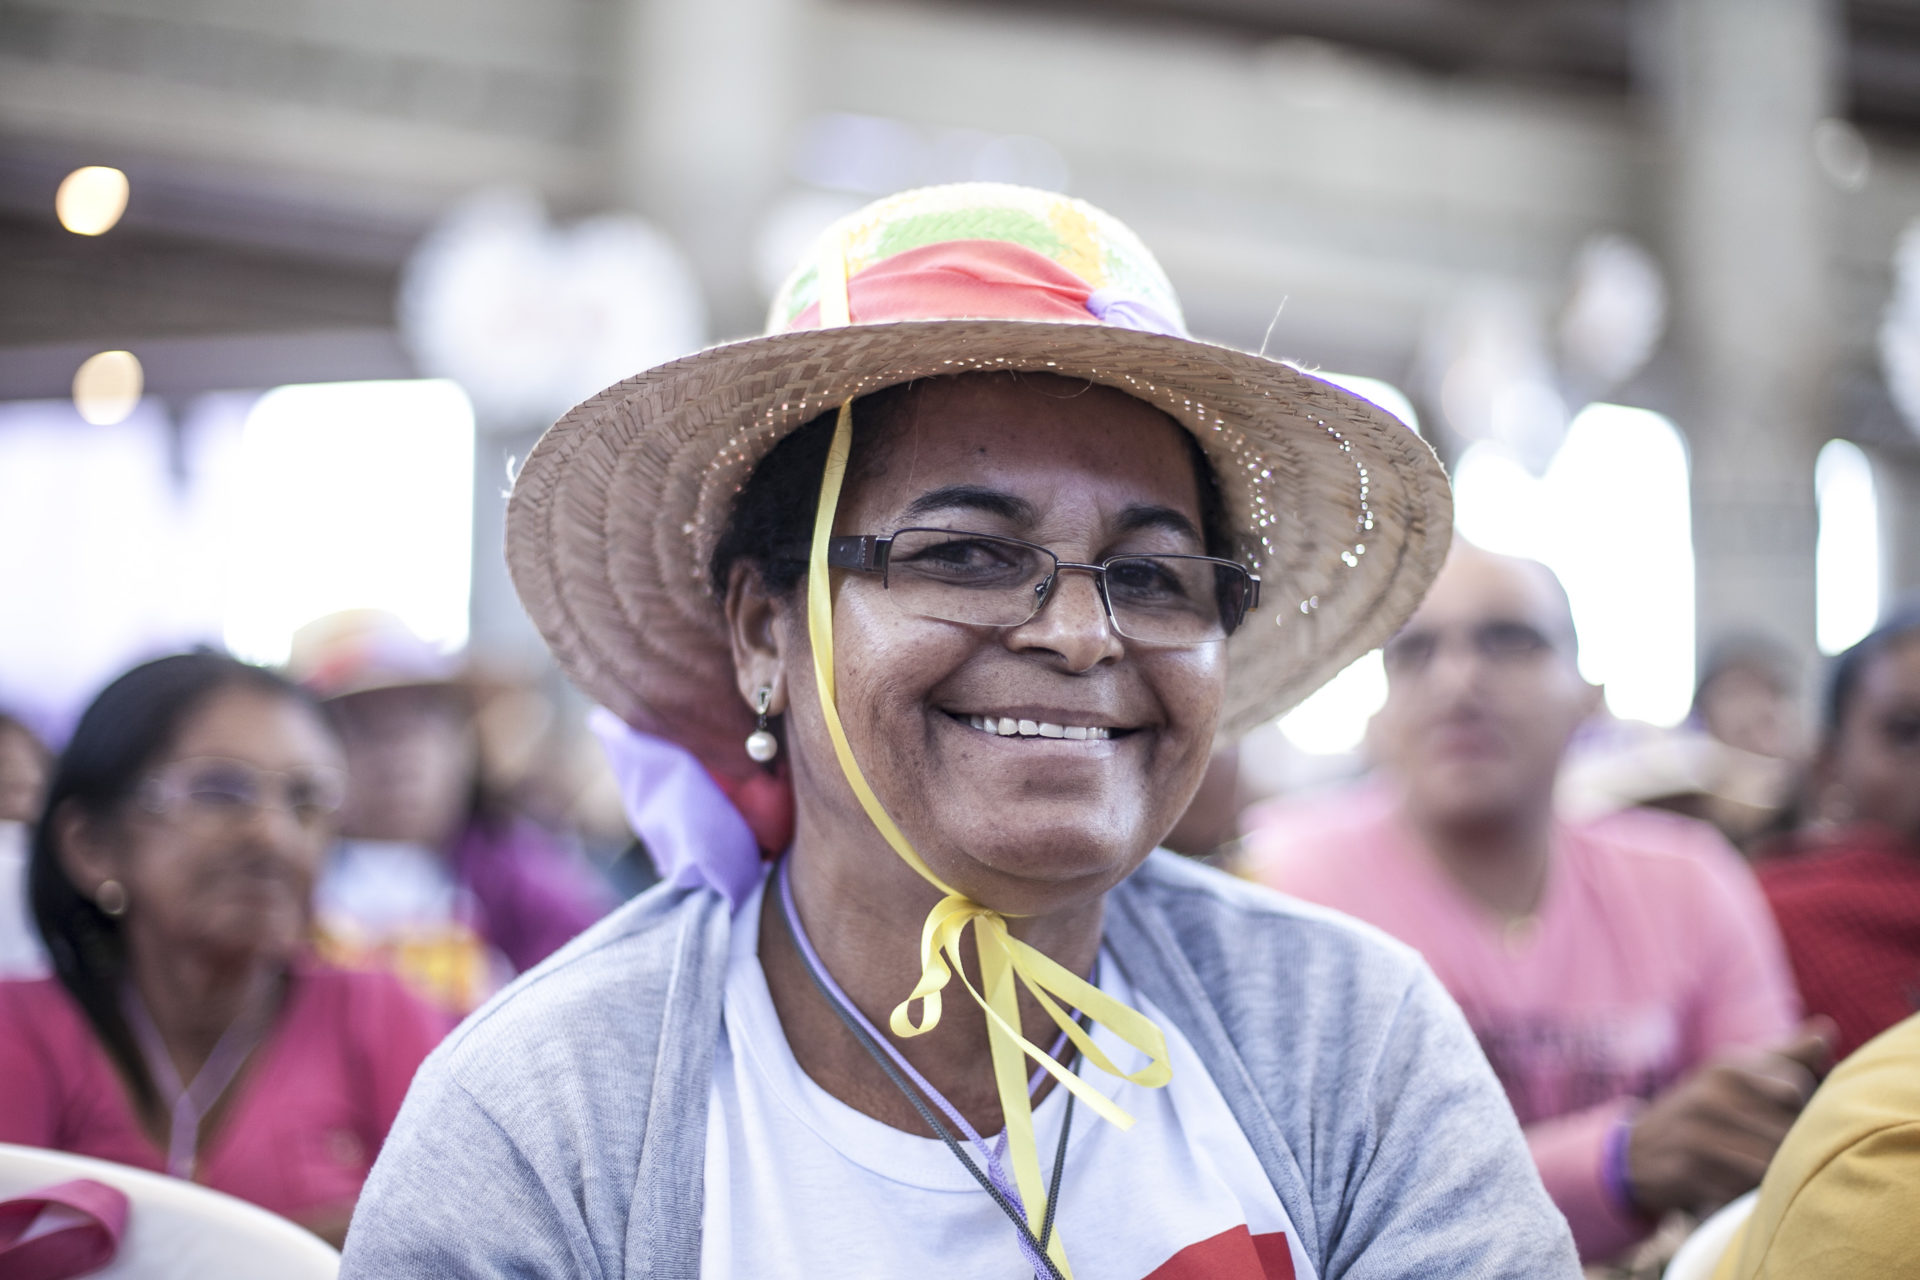 Marcha das Margaridas em Brasília. Foto: Mídia Ninja